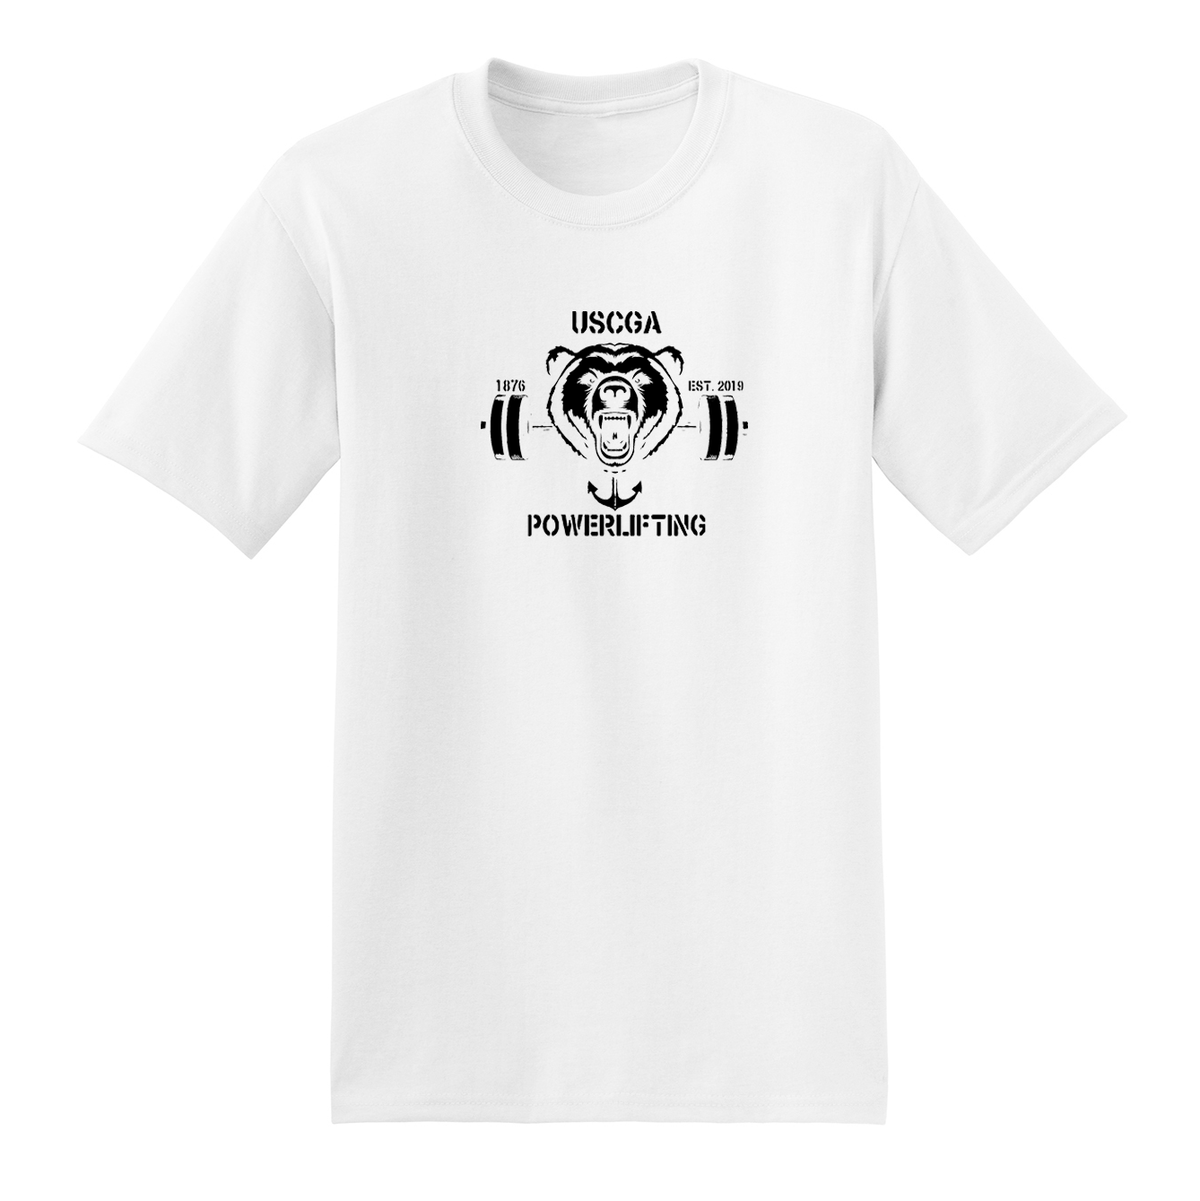 USCGA Powerlifting & Bodybuilding Club T-Shirt